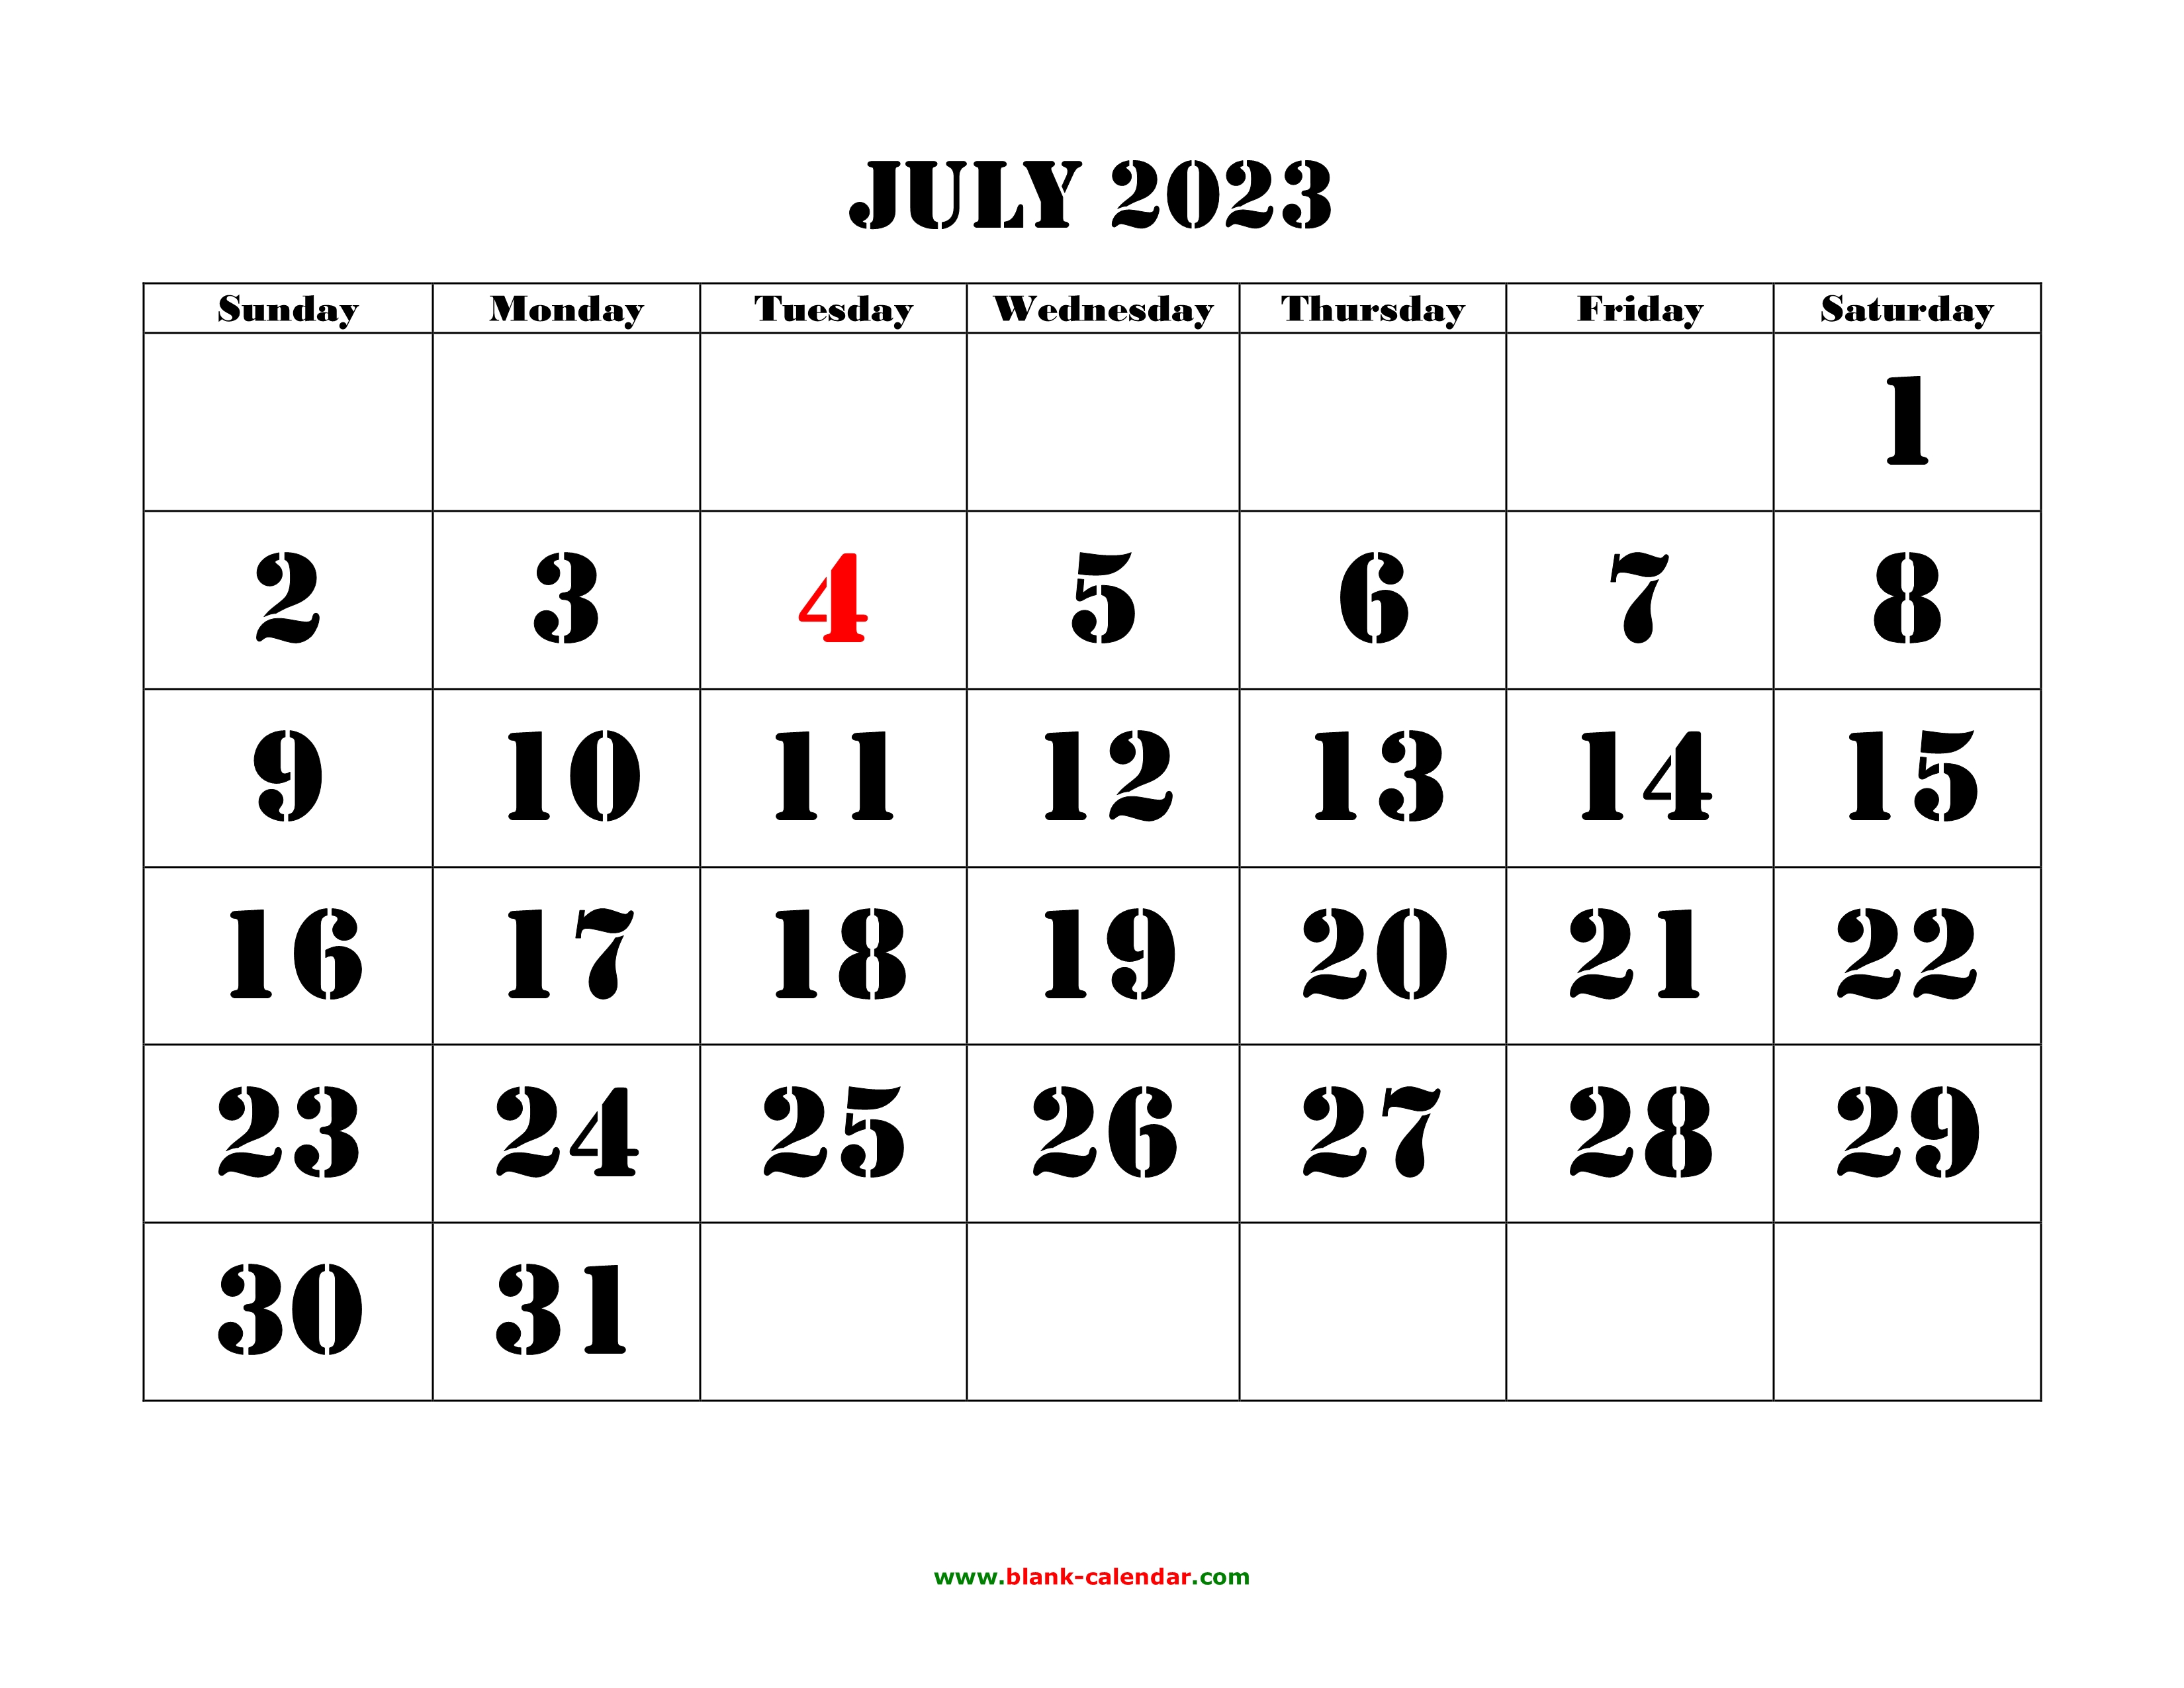 large-july-2023-calendar-get-calendar-2023-update